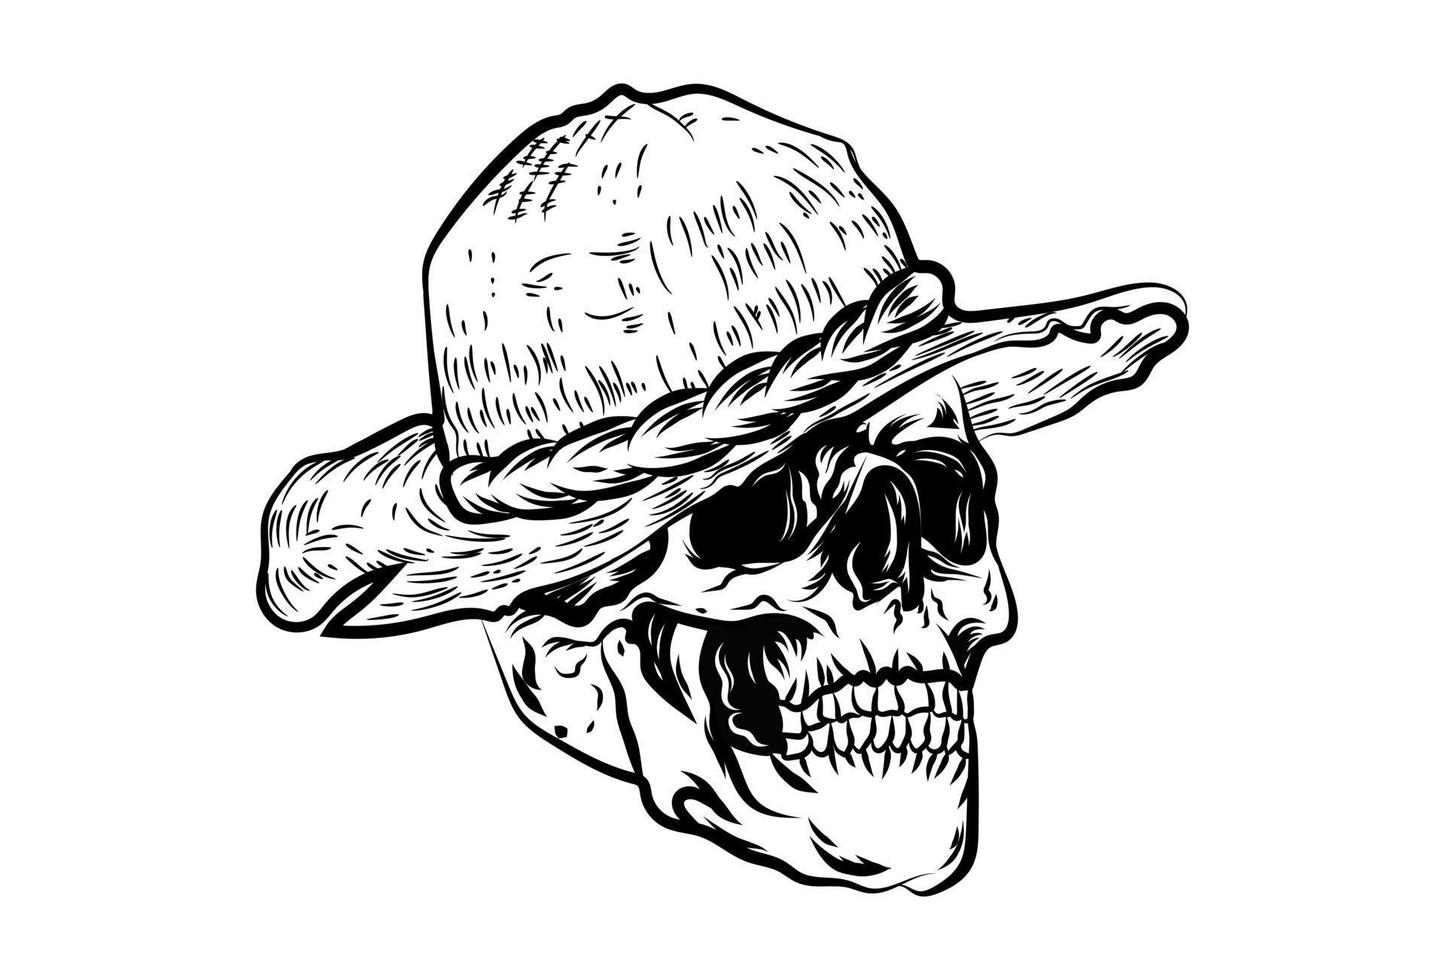 Skull with hat vector illustration